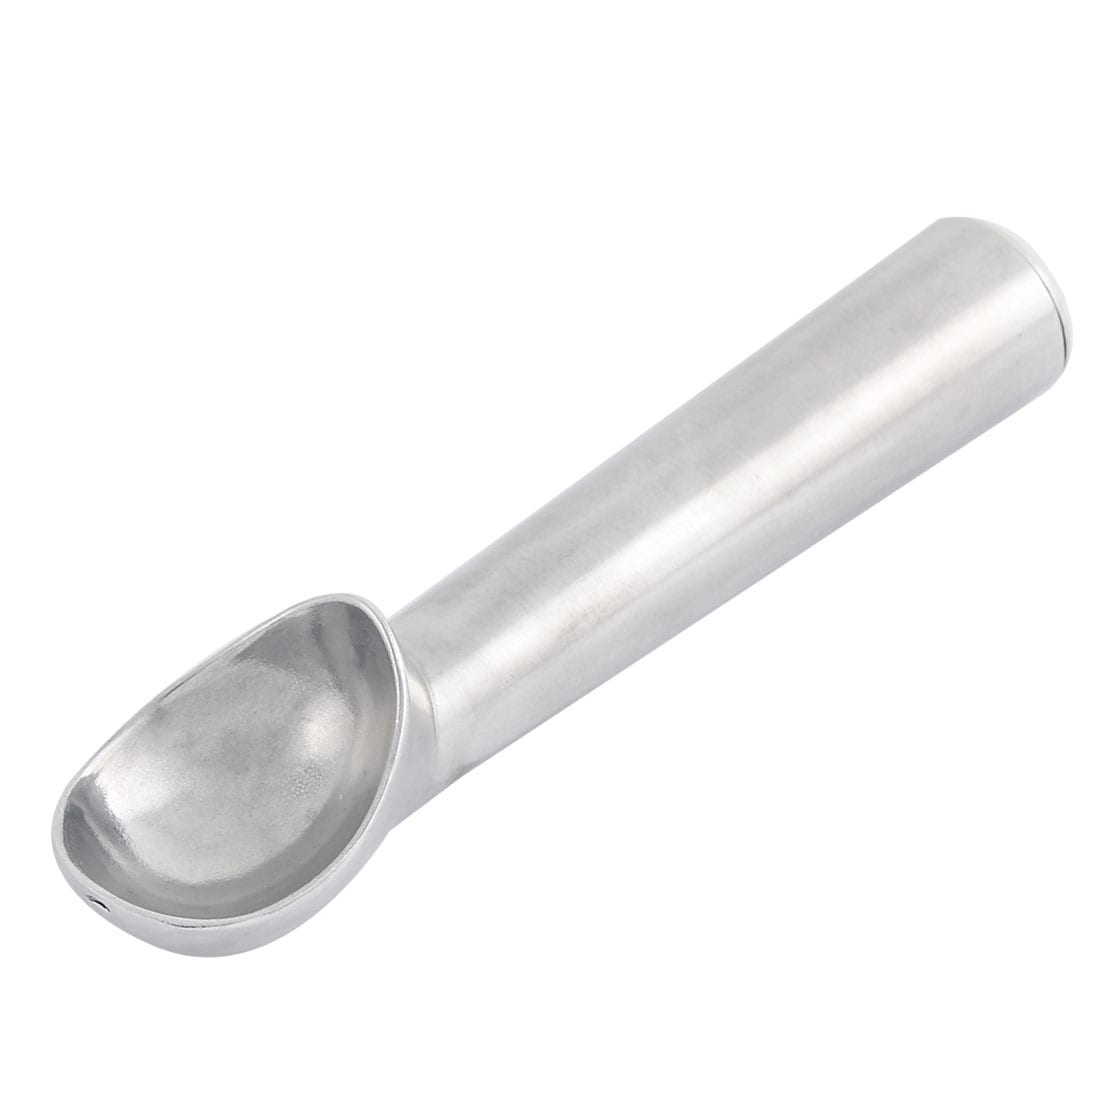 https://ak1.ostkcdn.com/images/products/is/images/direct/d78fef68f09c366dec4979b0b0a74adad98703b5/Household-Aluminum-Non-Stick-Bowl-Head-Ice-Cream-Scoop-Spoon-Dipper.jpg